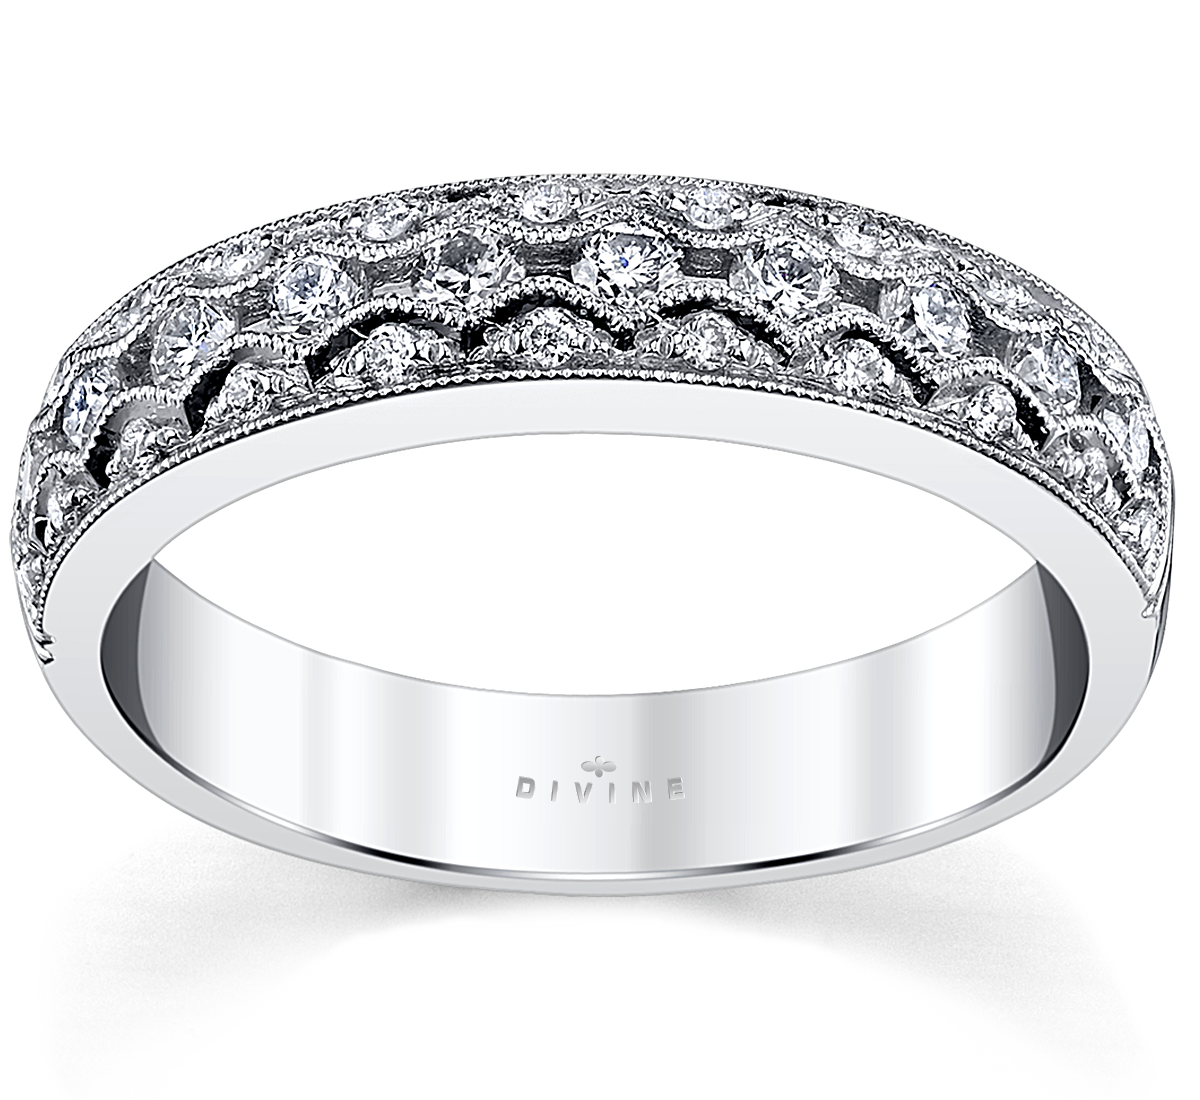 14K White Gold Diamond Wedding Ring 1/3 Cttw.